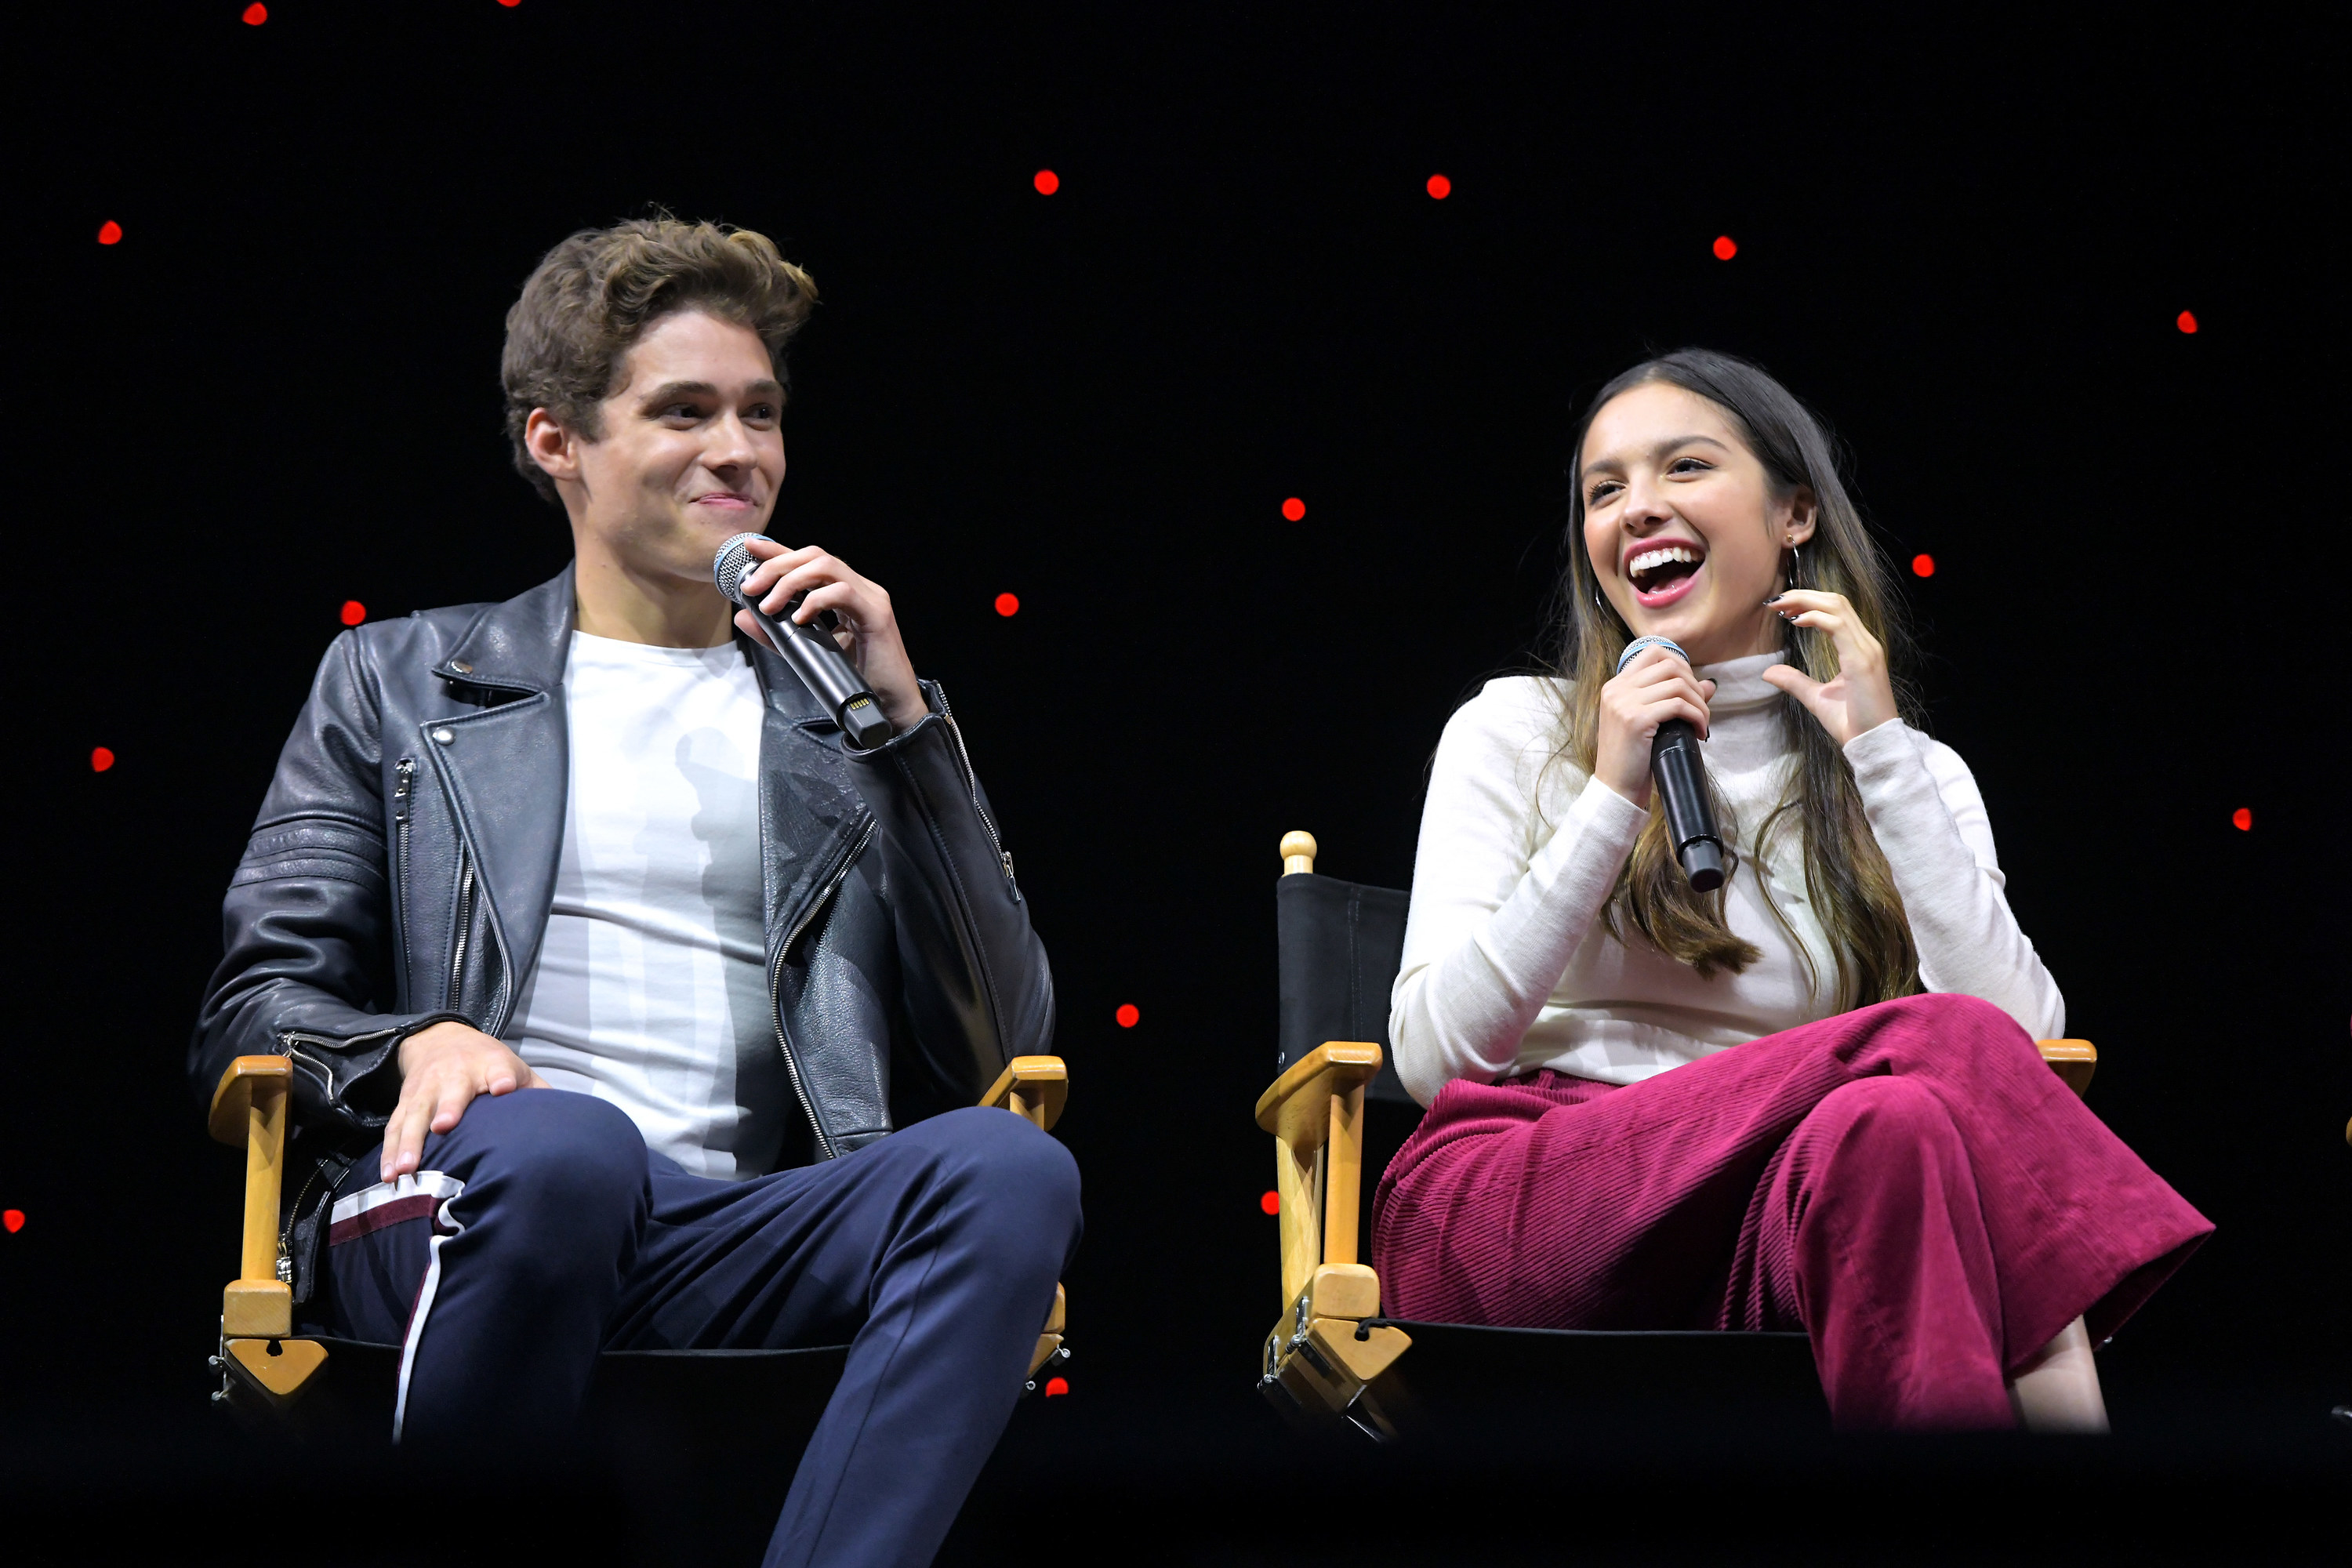 Joshua Bassett and Olivia Rodrigo at a Disney event in 2019